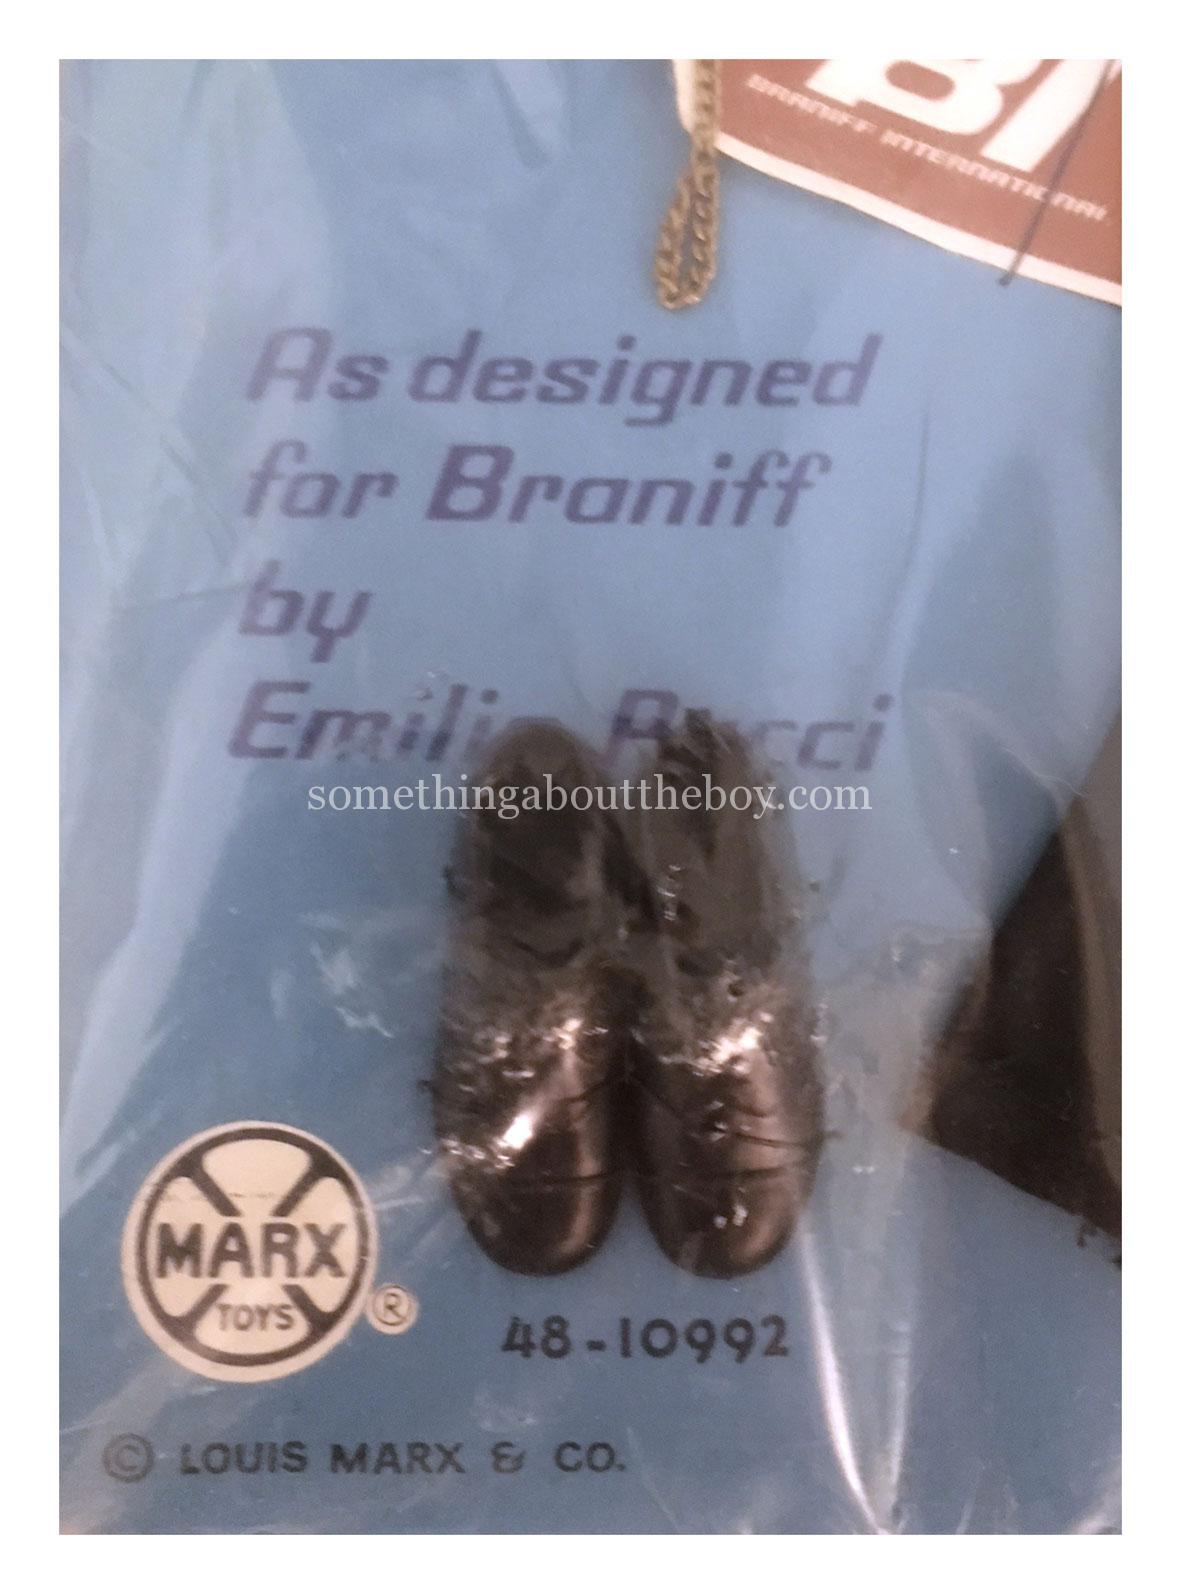 1967 #48-10992 Braniff Pilot Uniform in original packaging (detail)